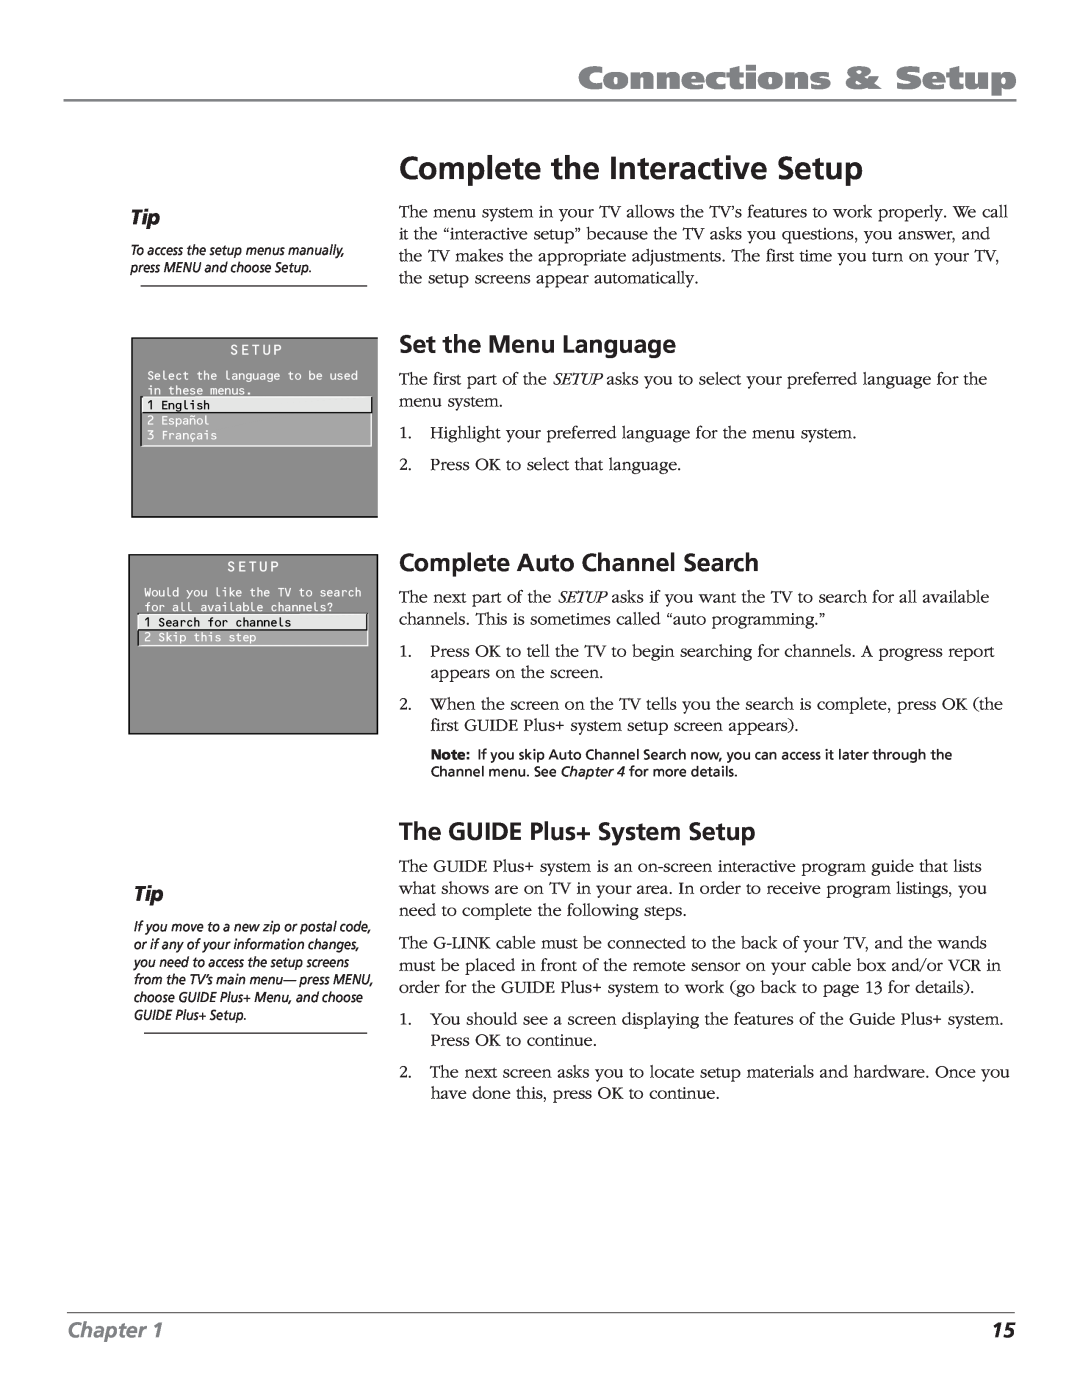 RCA MR68TF700 Complete the Interactive Setup, Set the Menu Language, Complete Auto Channel Search, Connections & Setup 